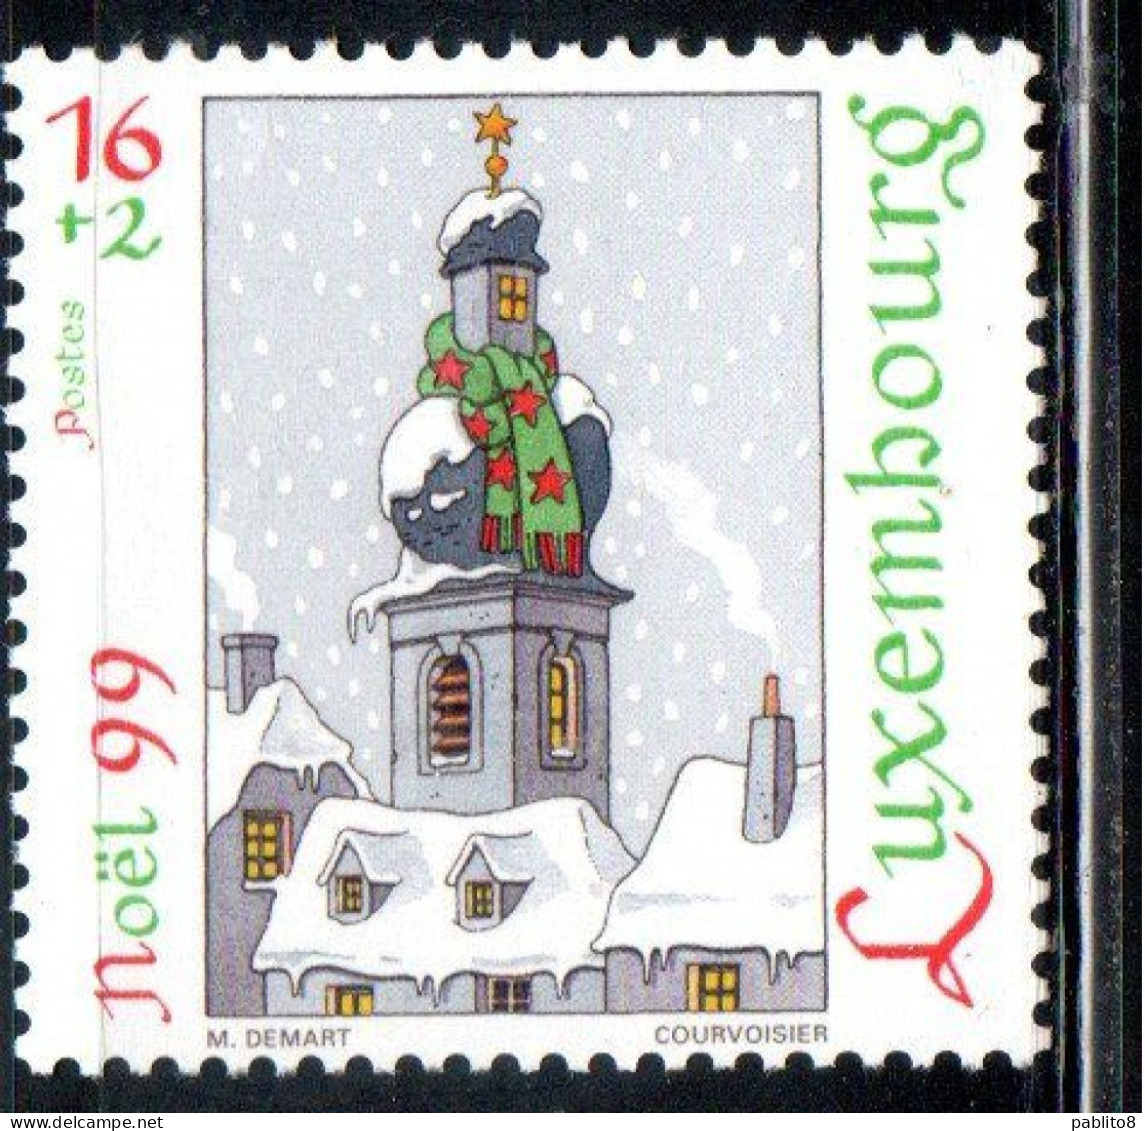 LUXEMBOURG LUSSEMBURGO 1999 CHRISTMAS NATALE NOEL WEIHNACHTEN NAVIDAD 16 +2 MNH - Nuovi